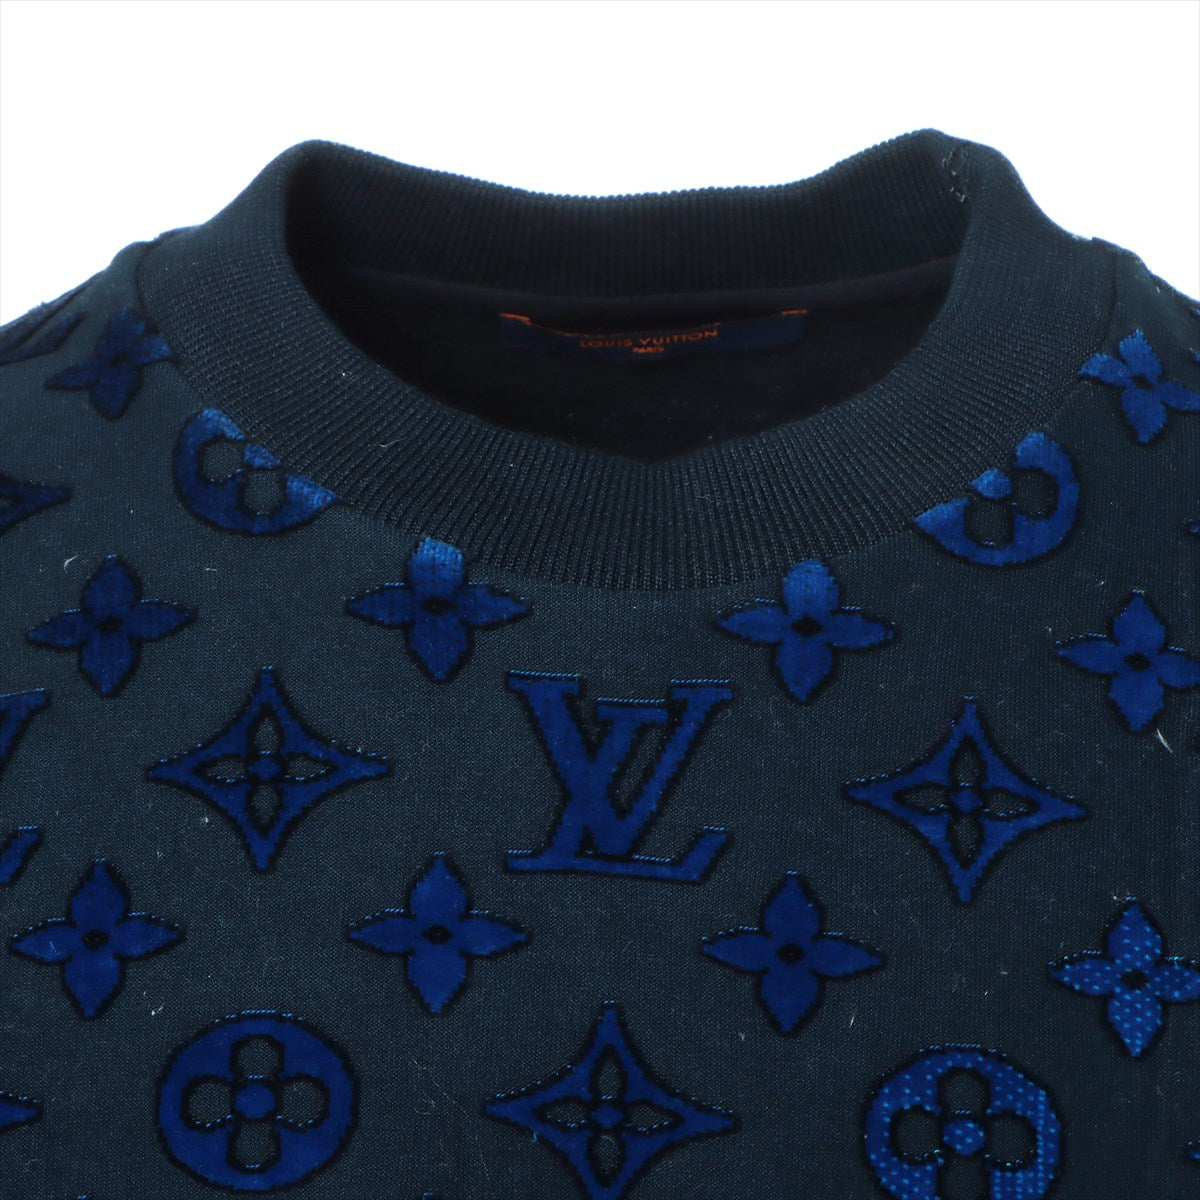 Louis Vuitton 22SS Cotton Basic knitted fabric L Men's Navy blue  RM221M gradient monogram